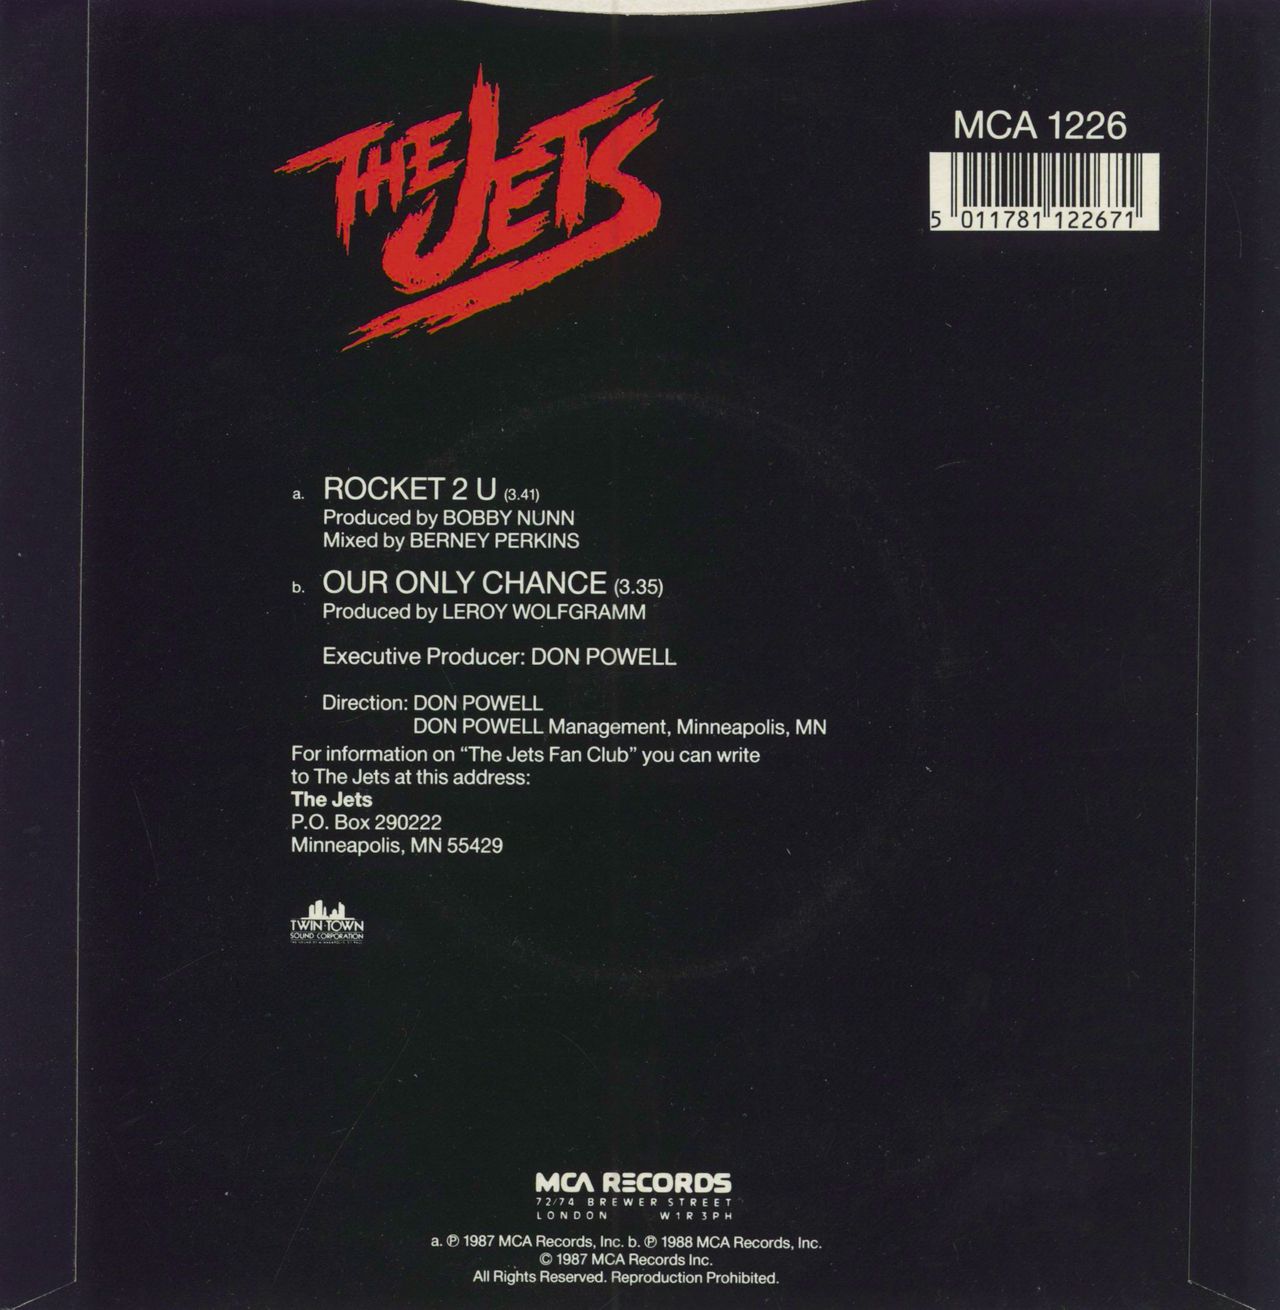 The Jets Rocket 2 U UK 7" vinyl single (7 inch record / 45) 5011781122671